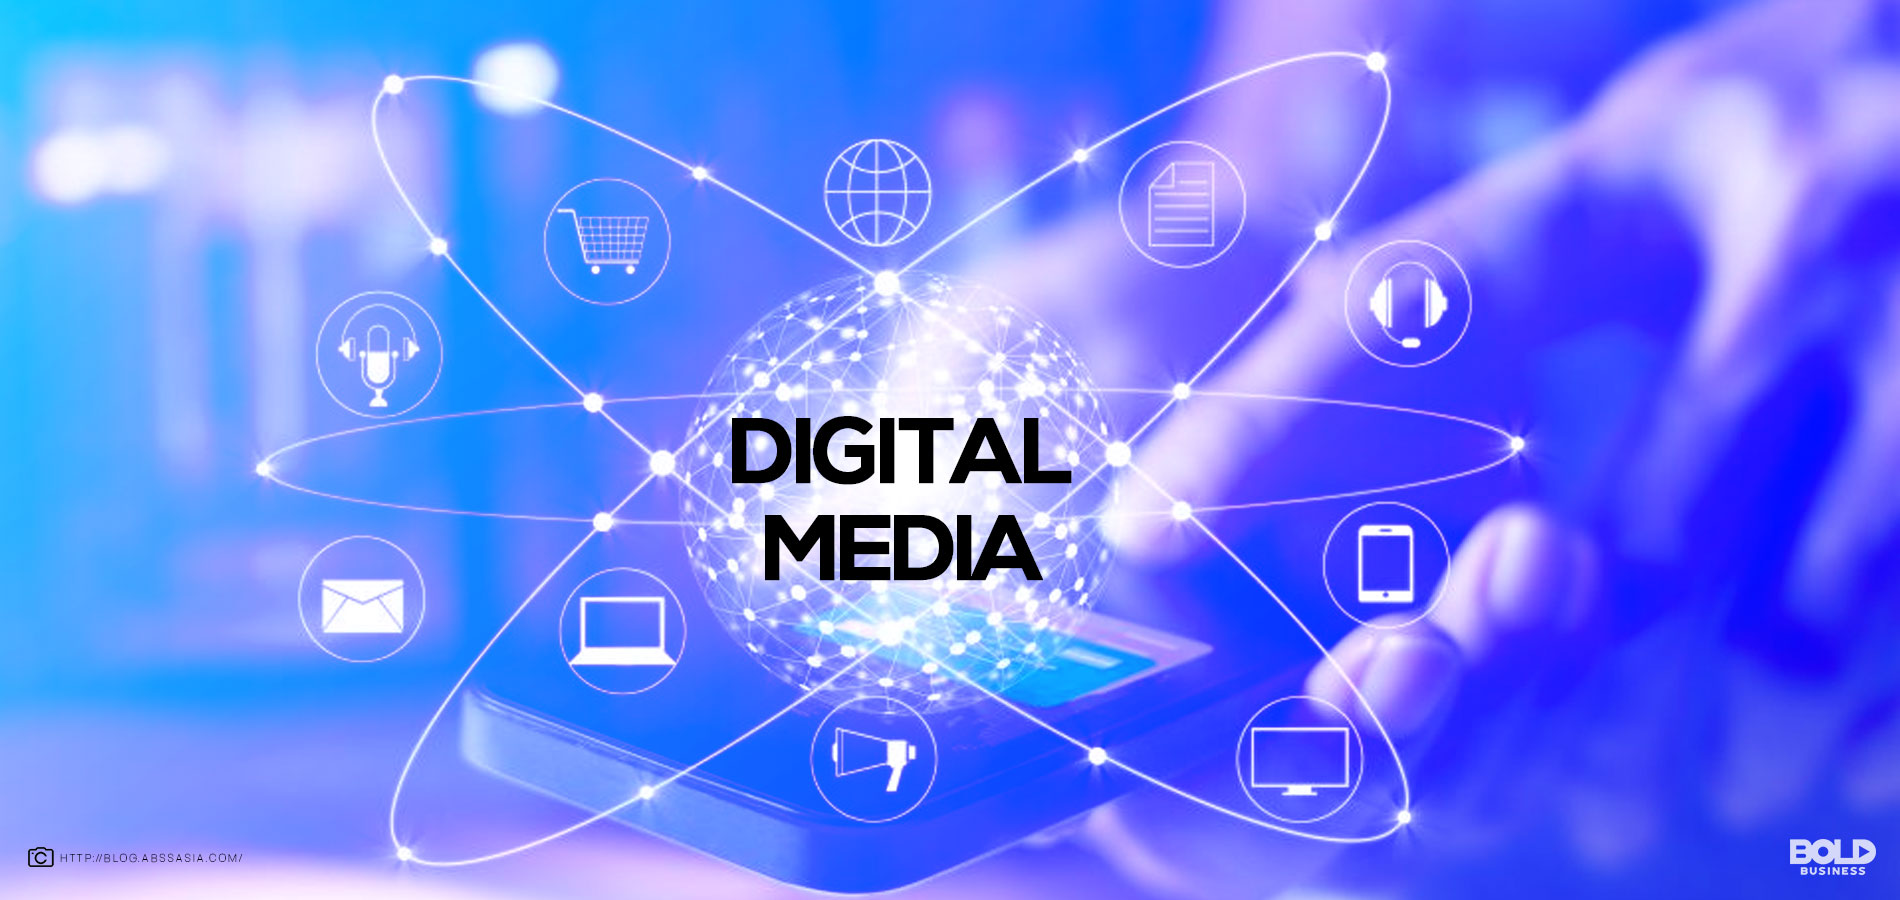 traditional media versus digital media companies, how do